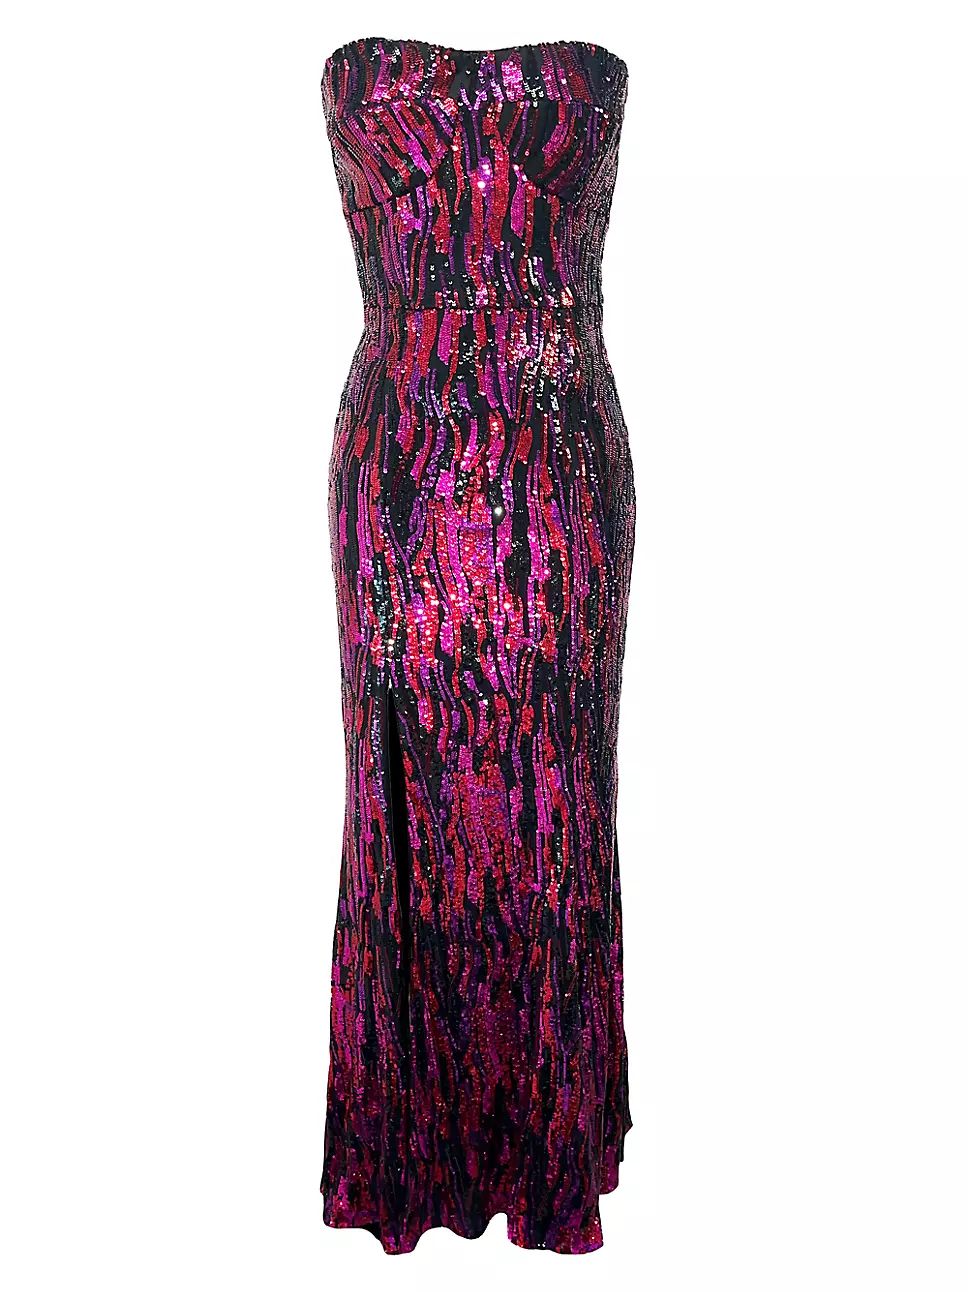 Dress The Population Nikita Sequin Tulle Mermaid Gown | Saks Fifth Avenue